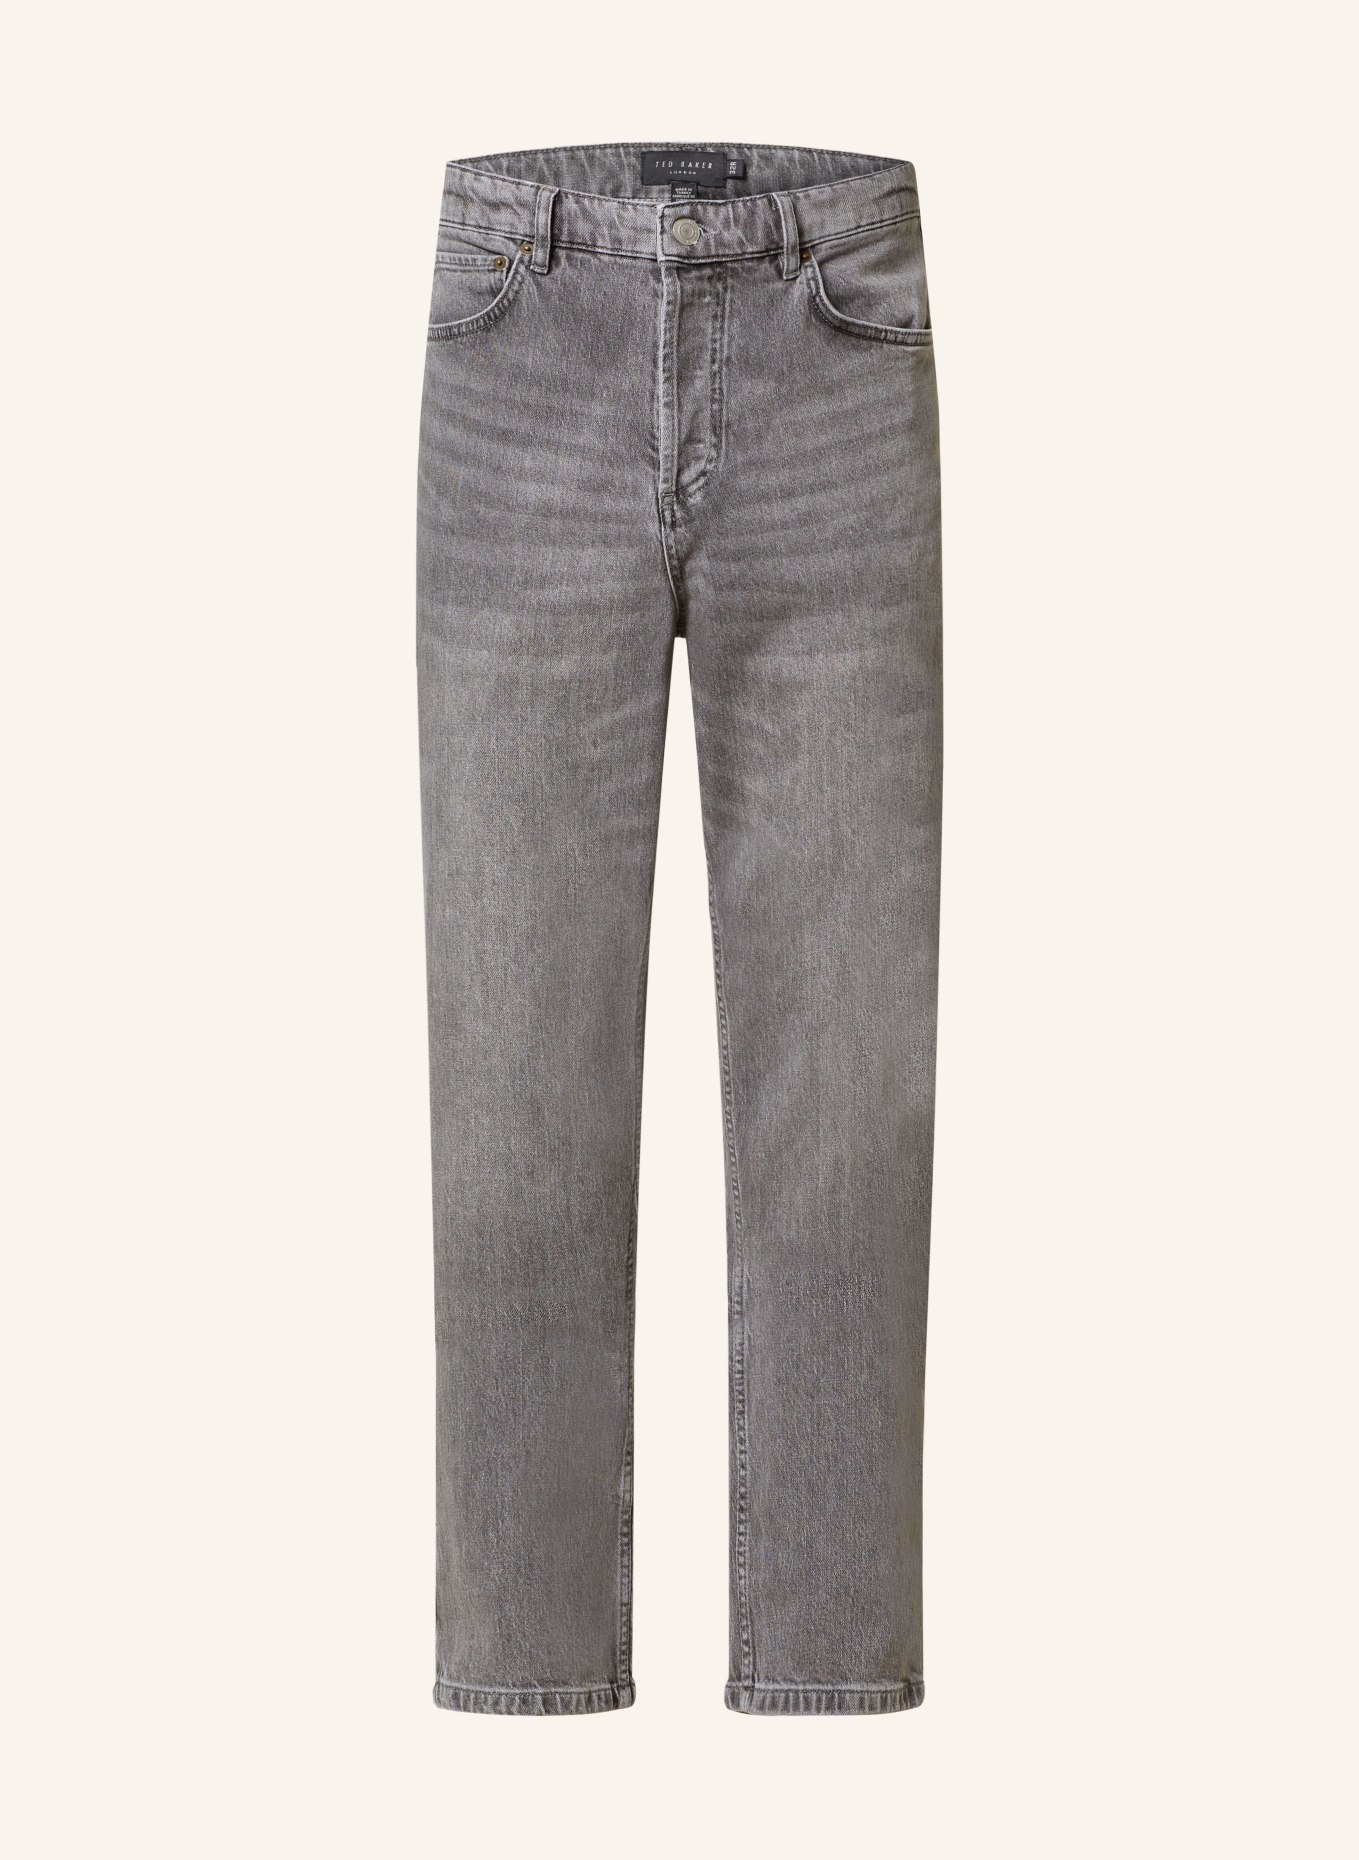 TED BAKER Jeans JOEYY Straight Fit, Farbe: GRAU (Bild 1)